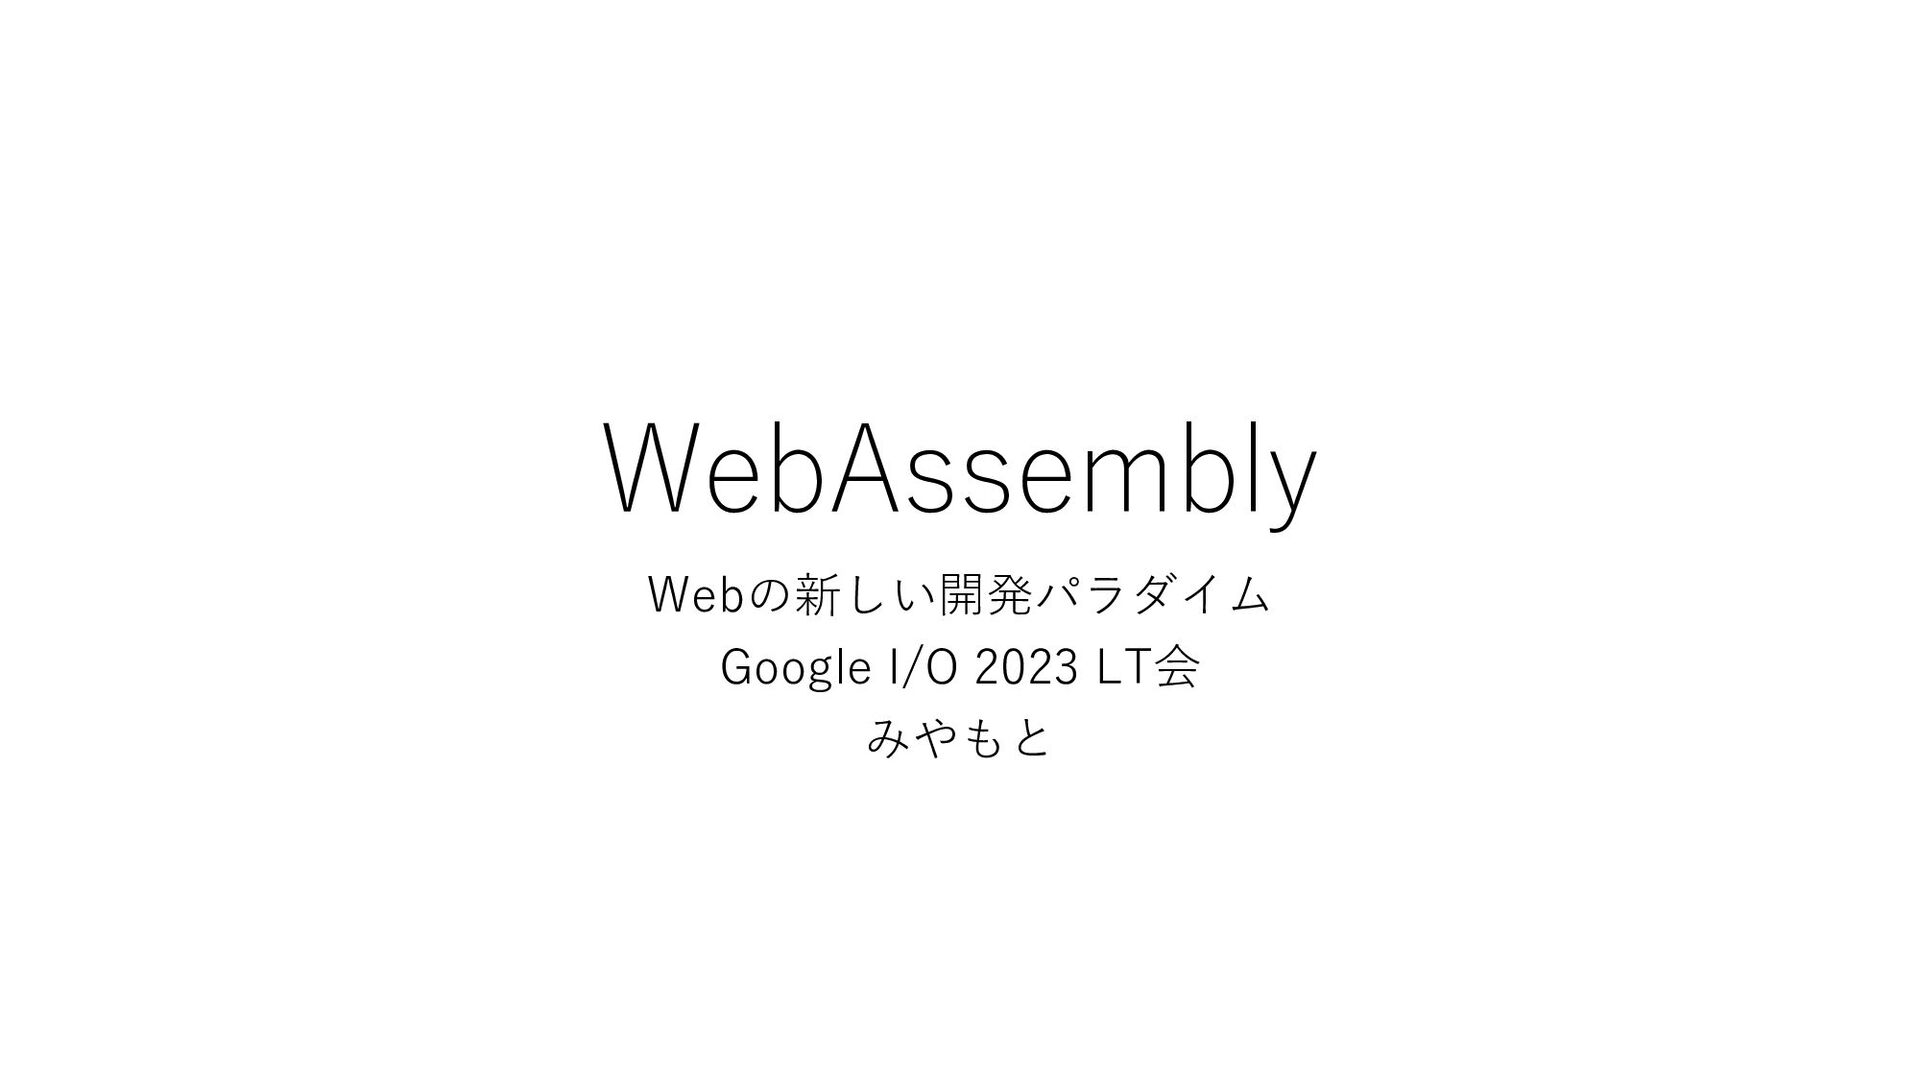 Slide Top: Cybozu Google I/O 2023 LT会 - WebAssembly